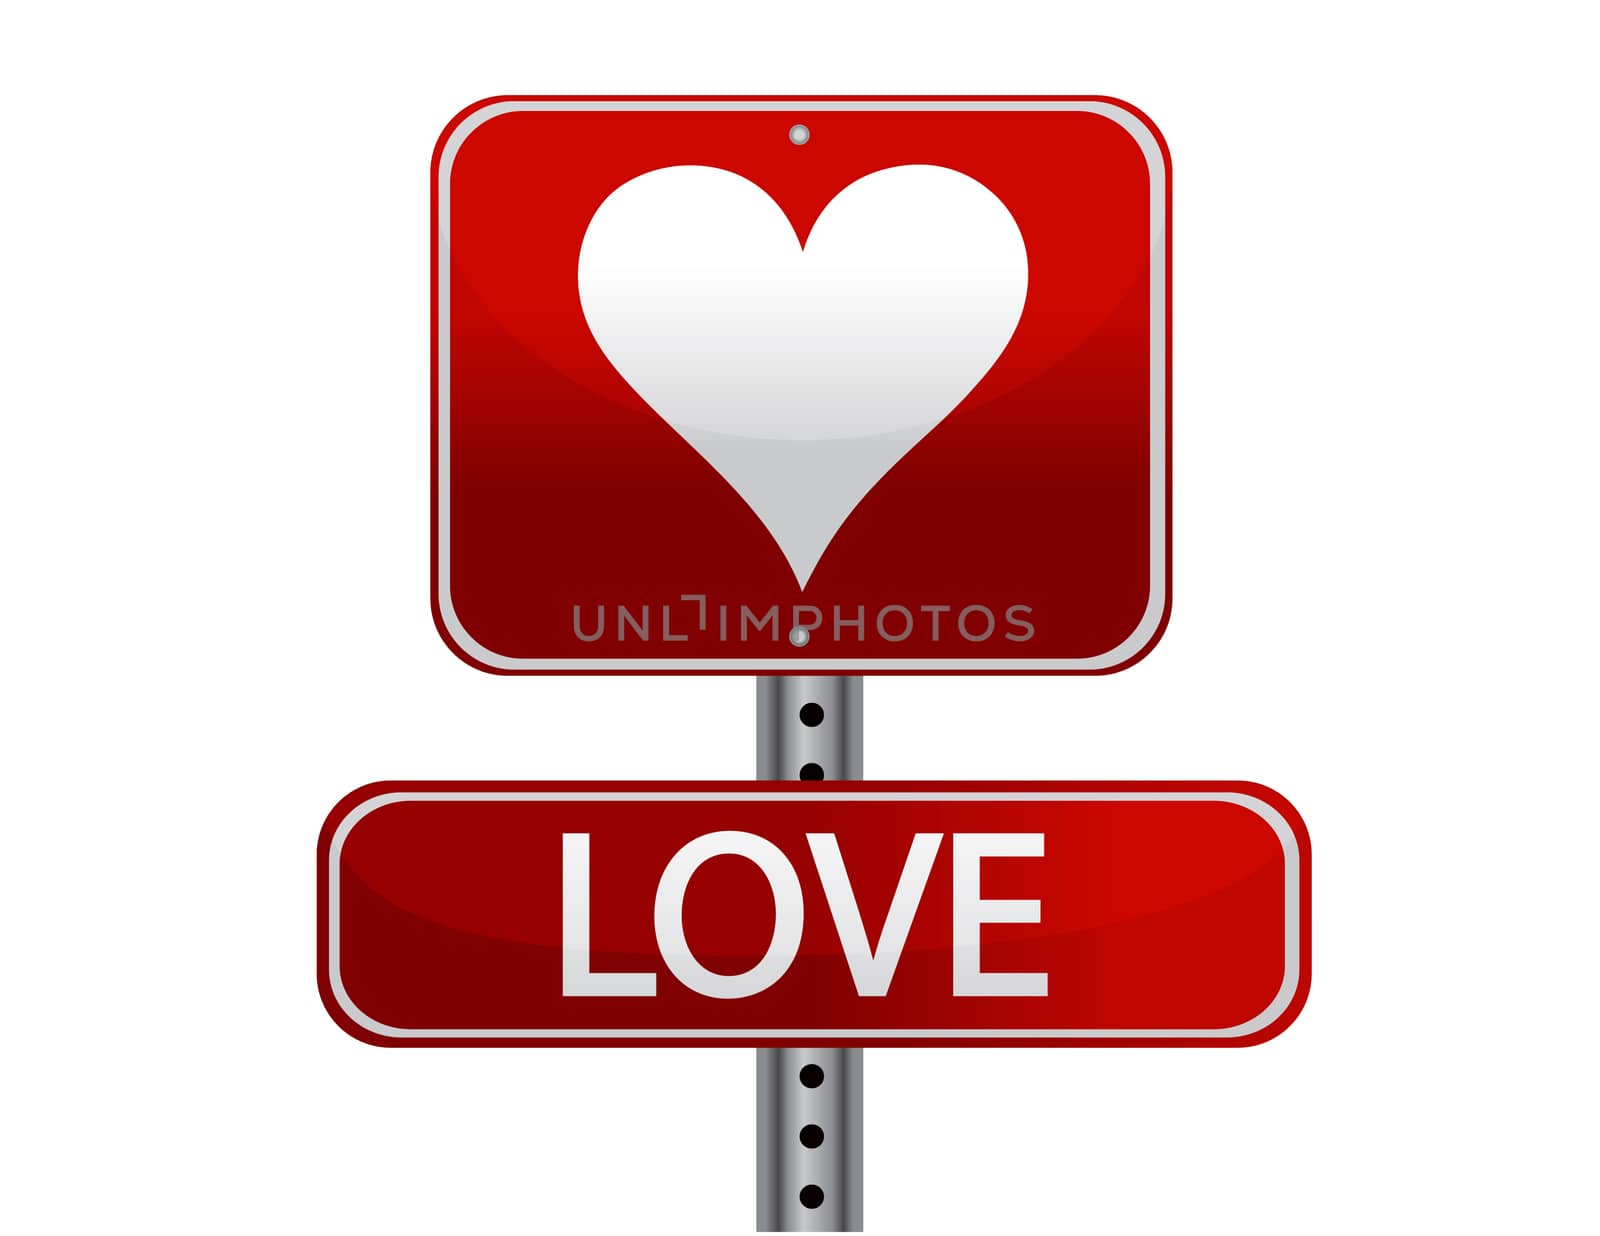 love sign illustration design isolated over white